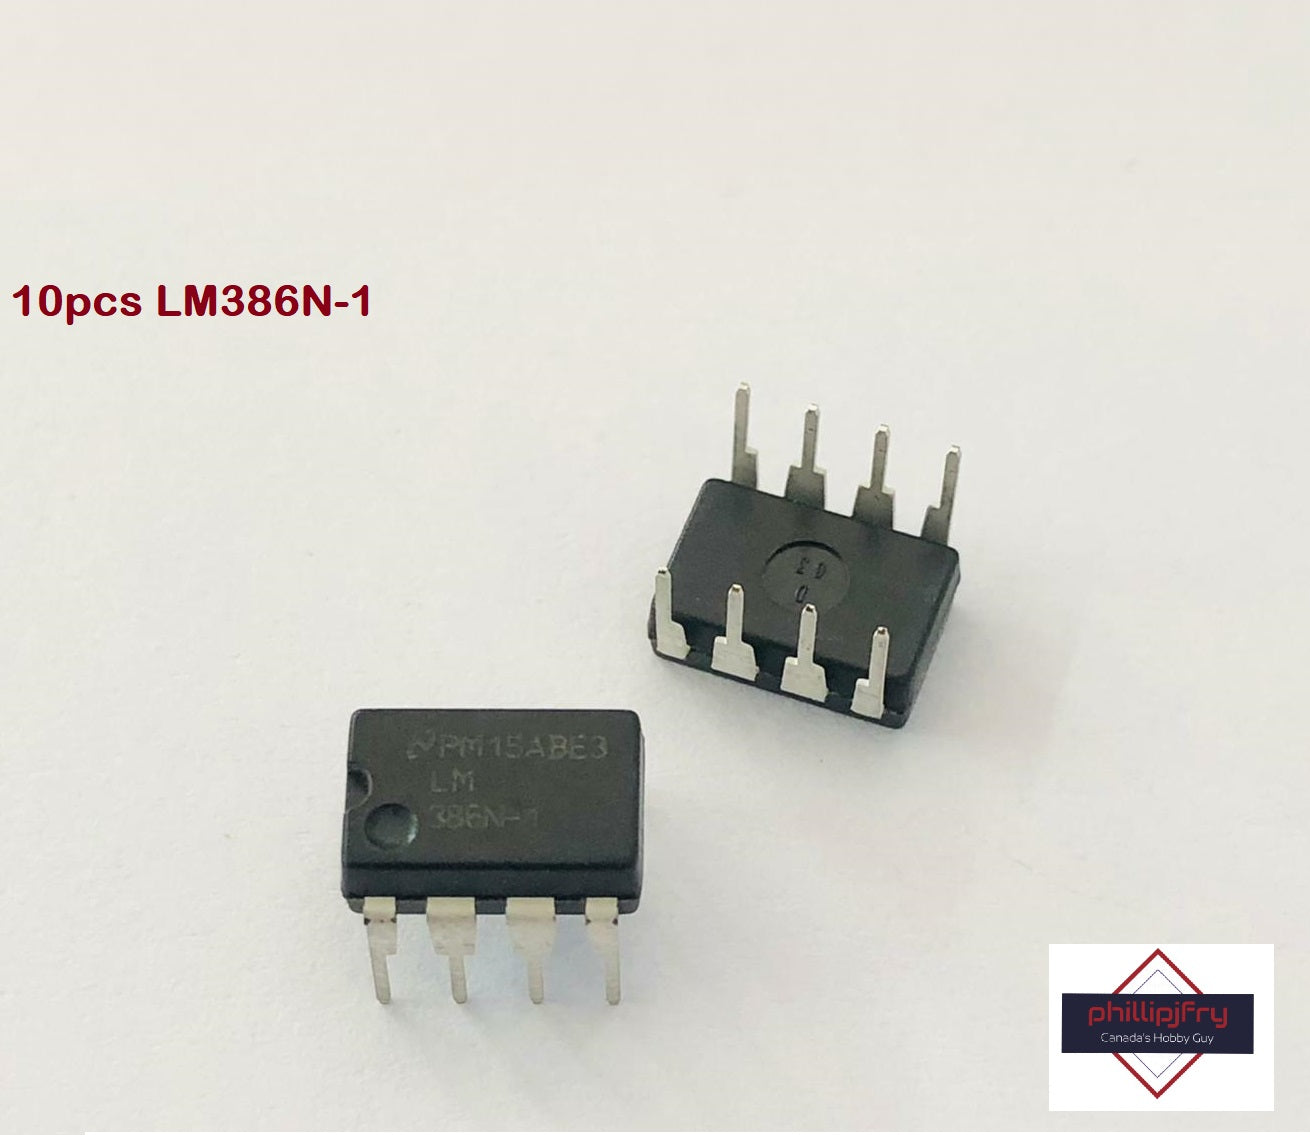 LM386 Low voltage audio amplifier DIP-8 IC. (10 pack)